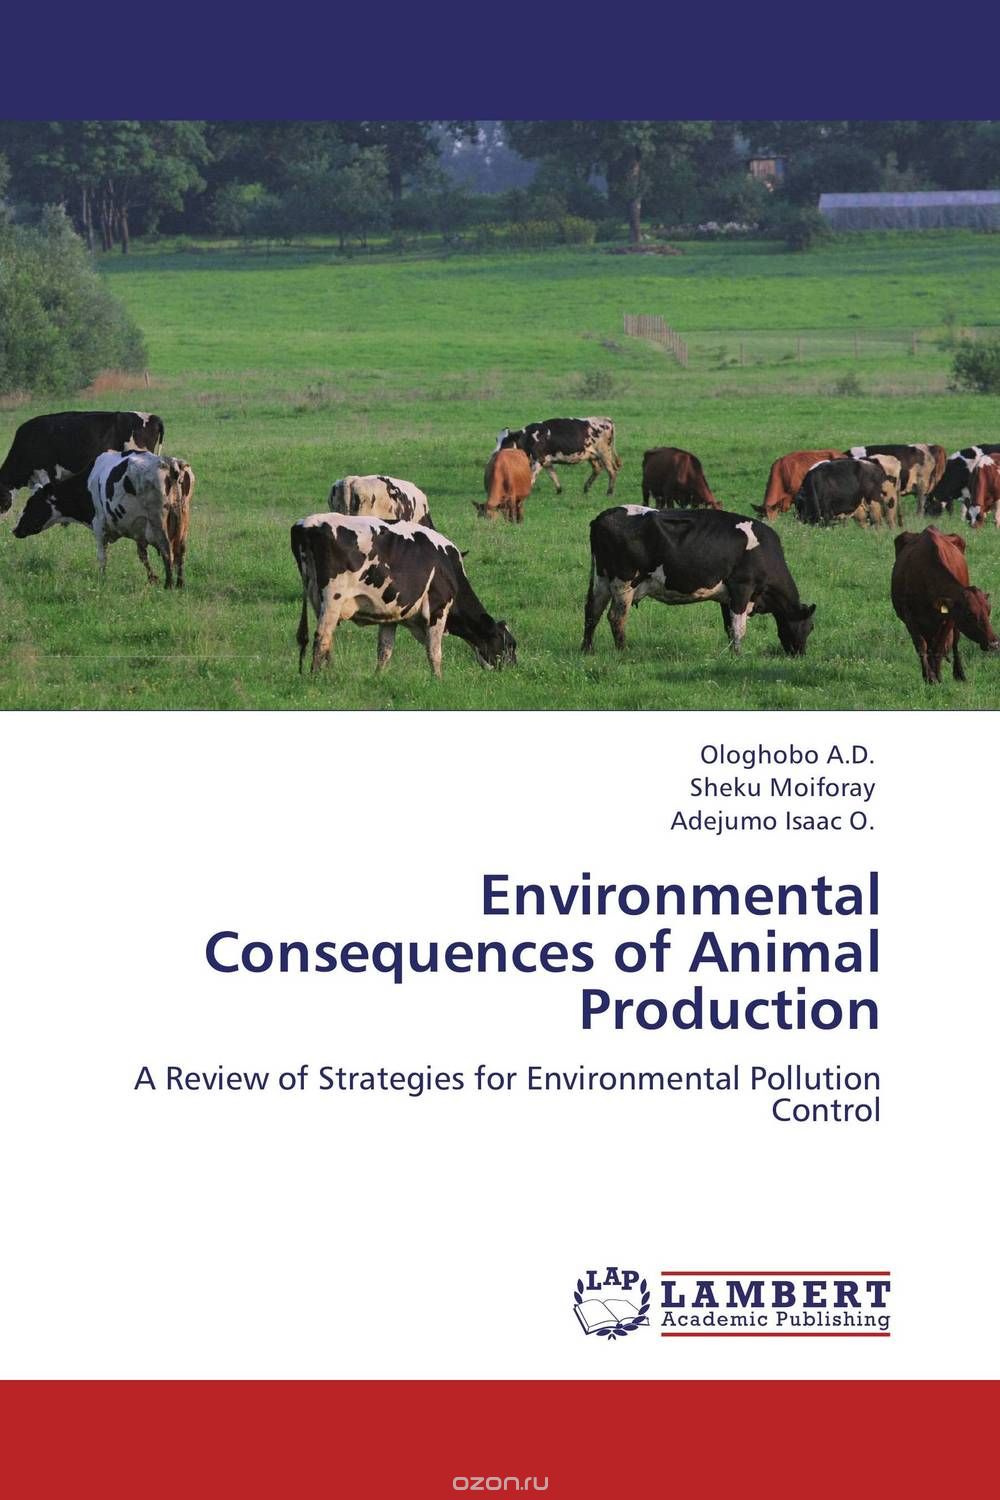 Скачать книгу "Environmental Consequences of Animal Production"